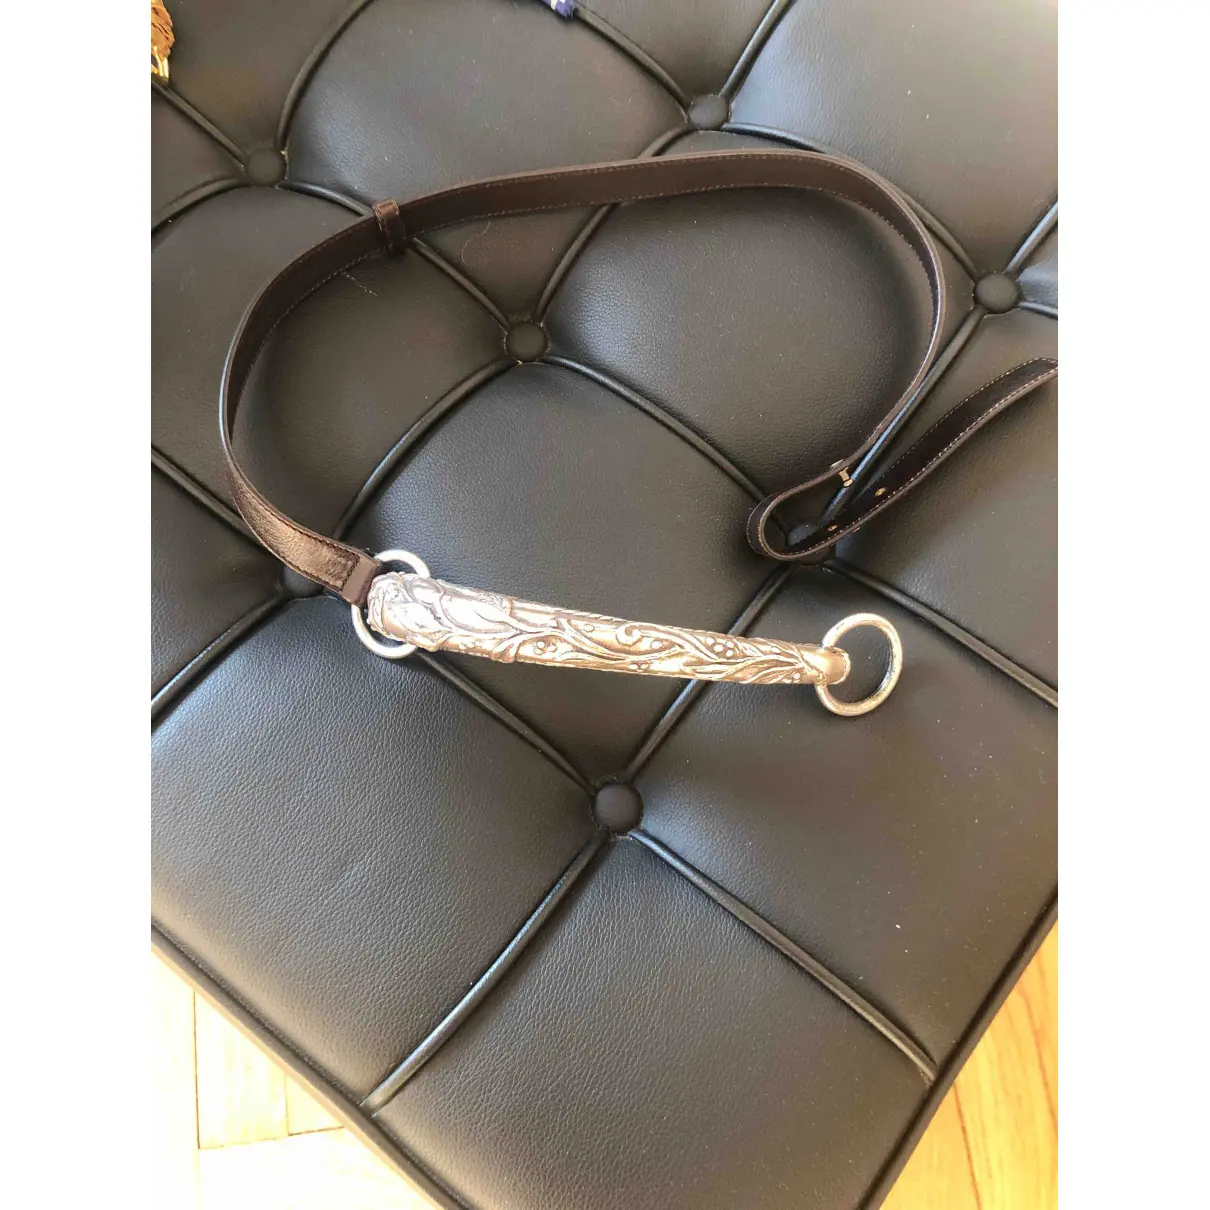 Buy Yves Saint Laurent Leather belt online - Vintage